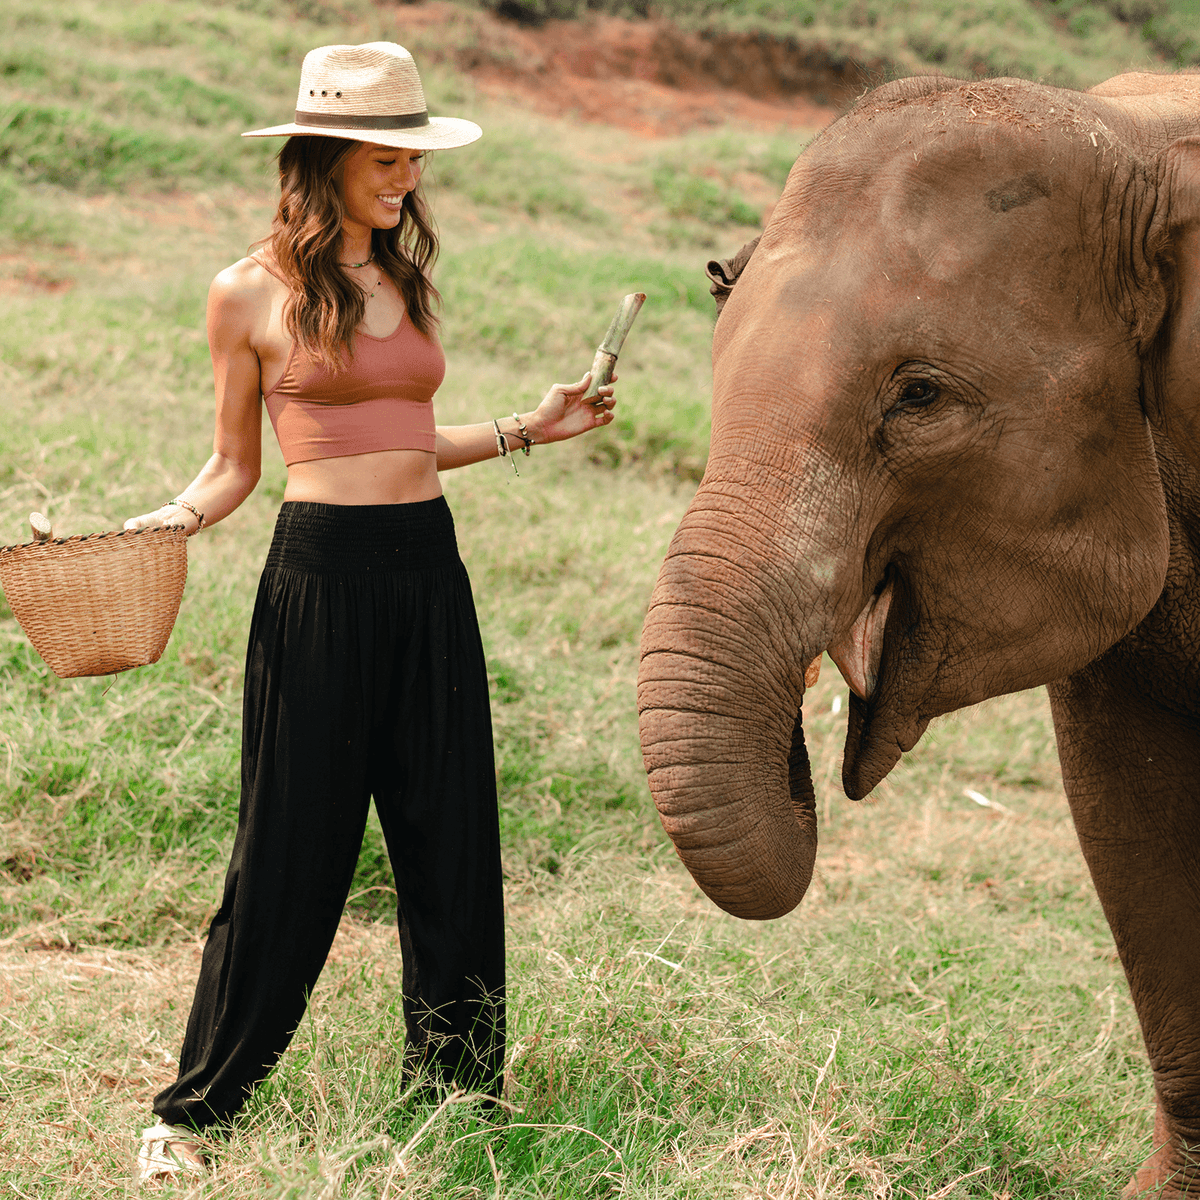 Woman wearing black harem pants while feeding elephant in Thailand.